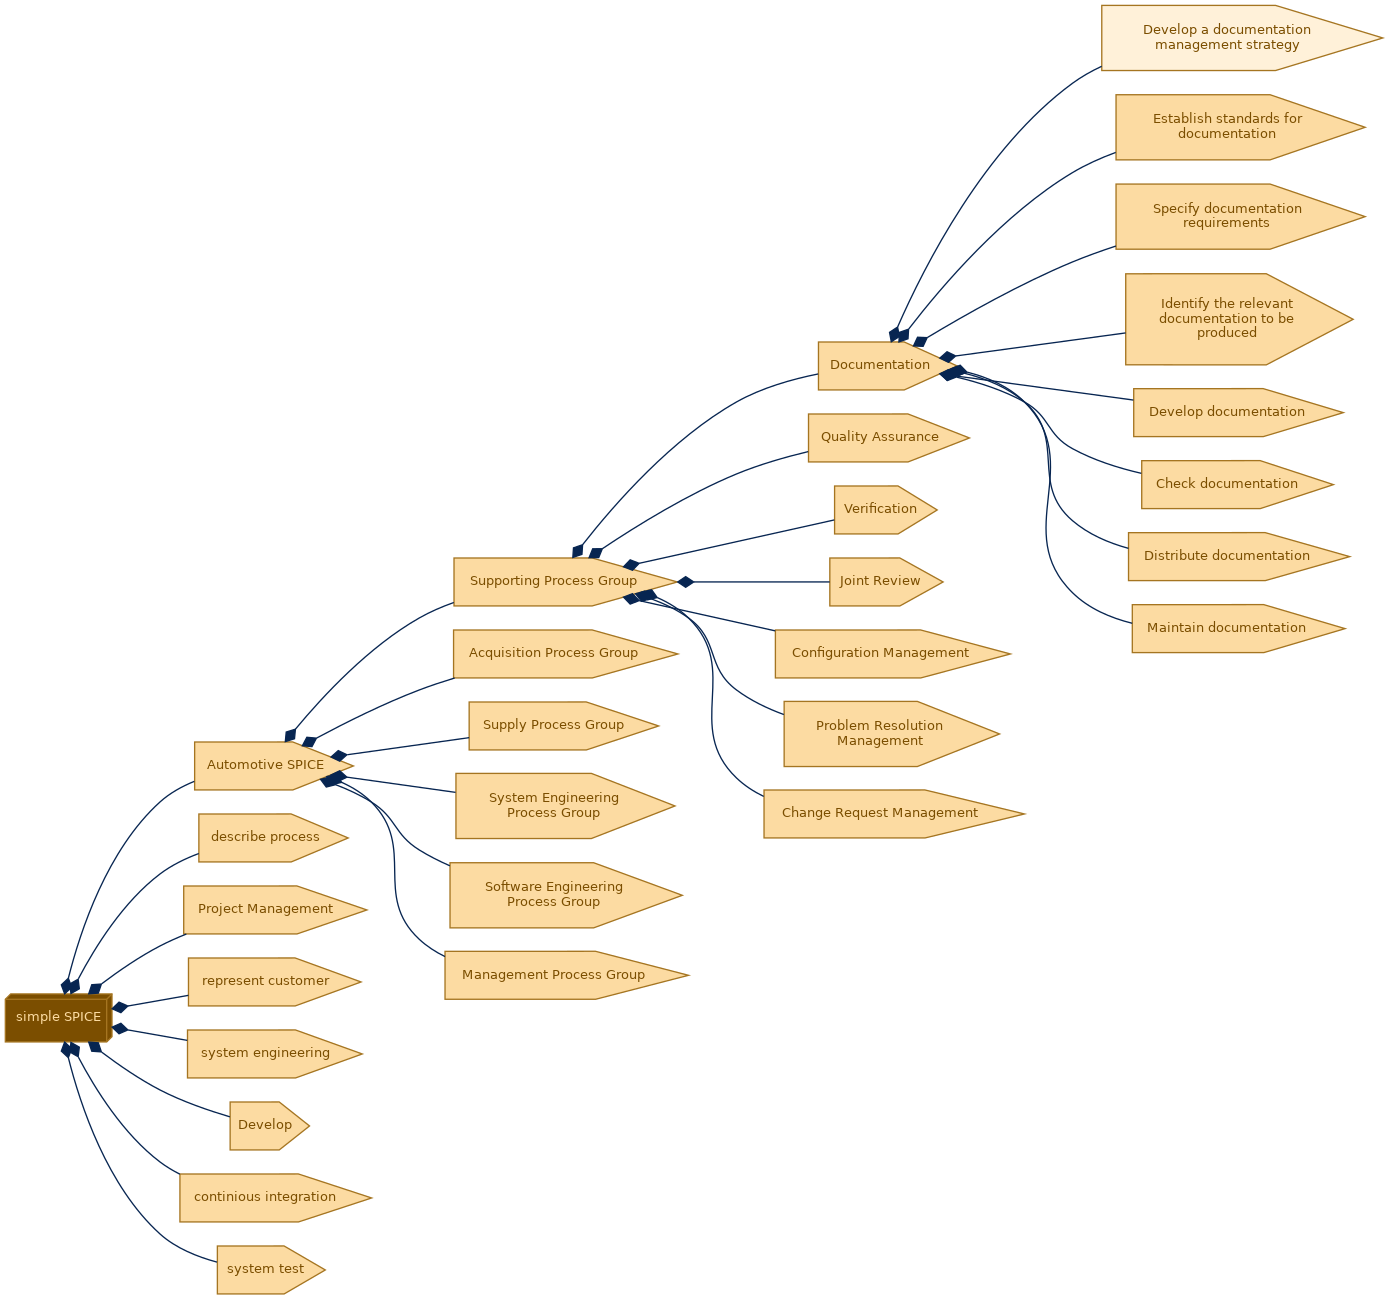 spem diagram of the activity breakdown: Develop a documentation management strategy